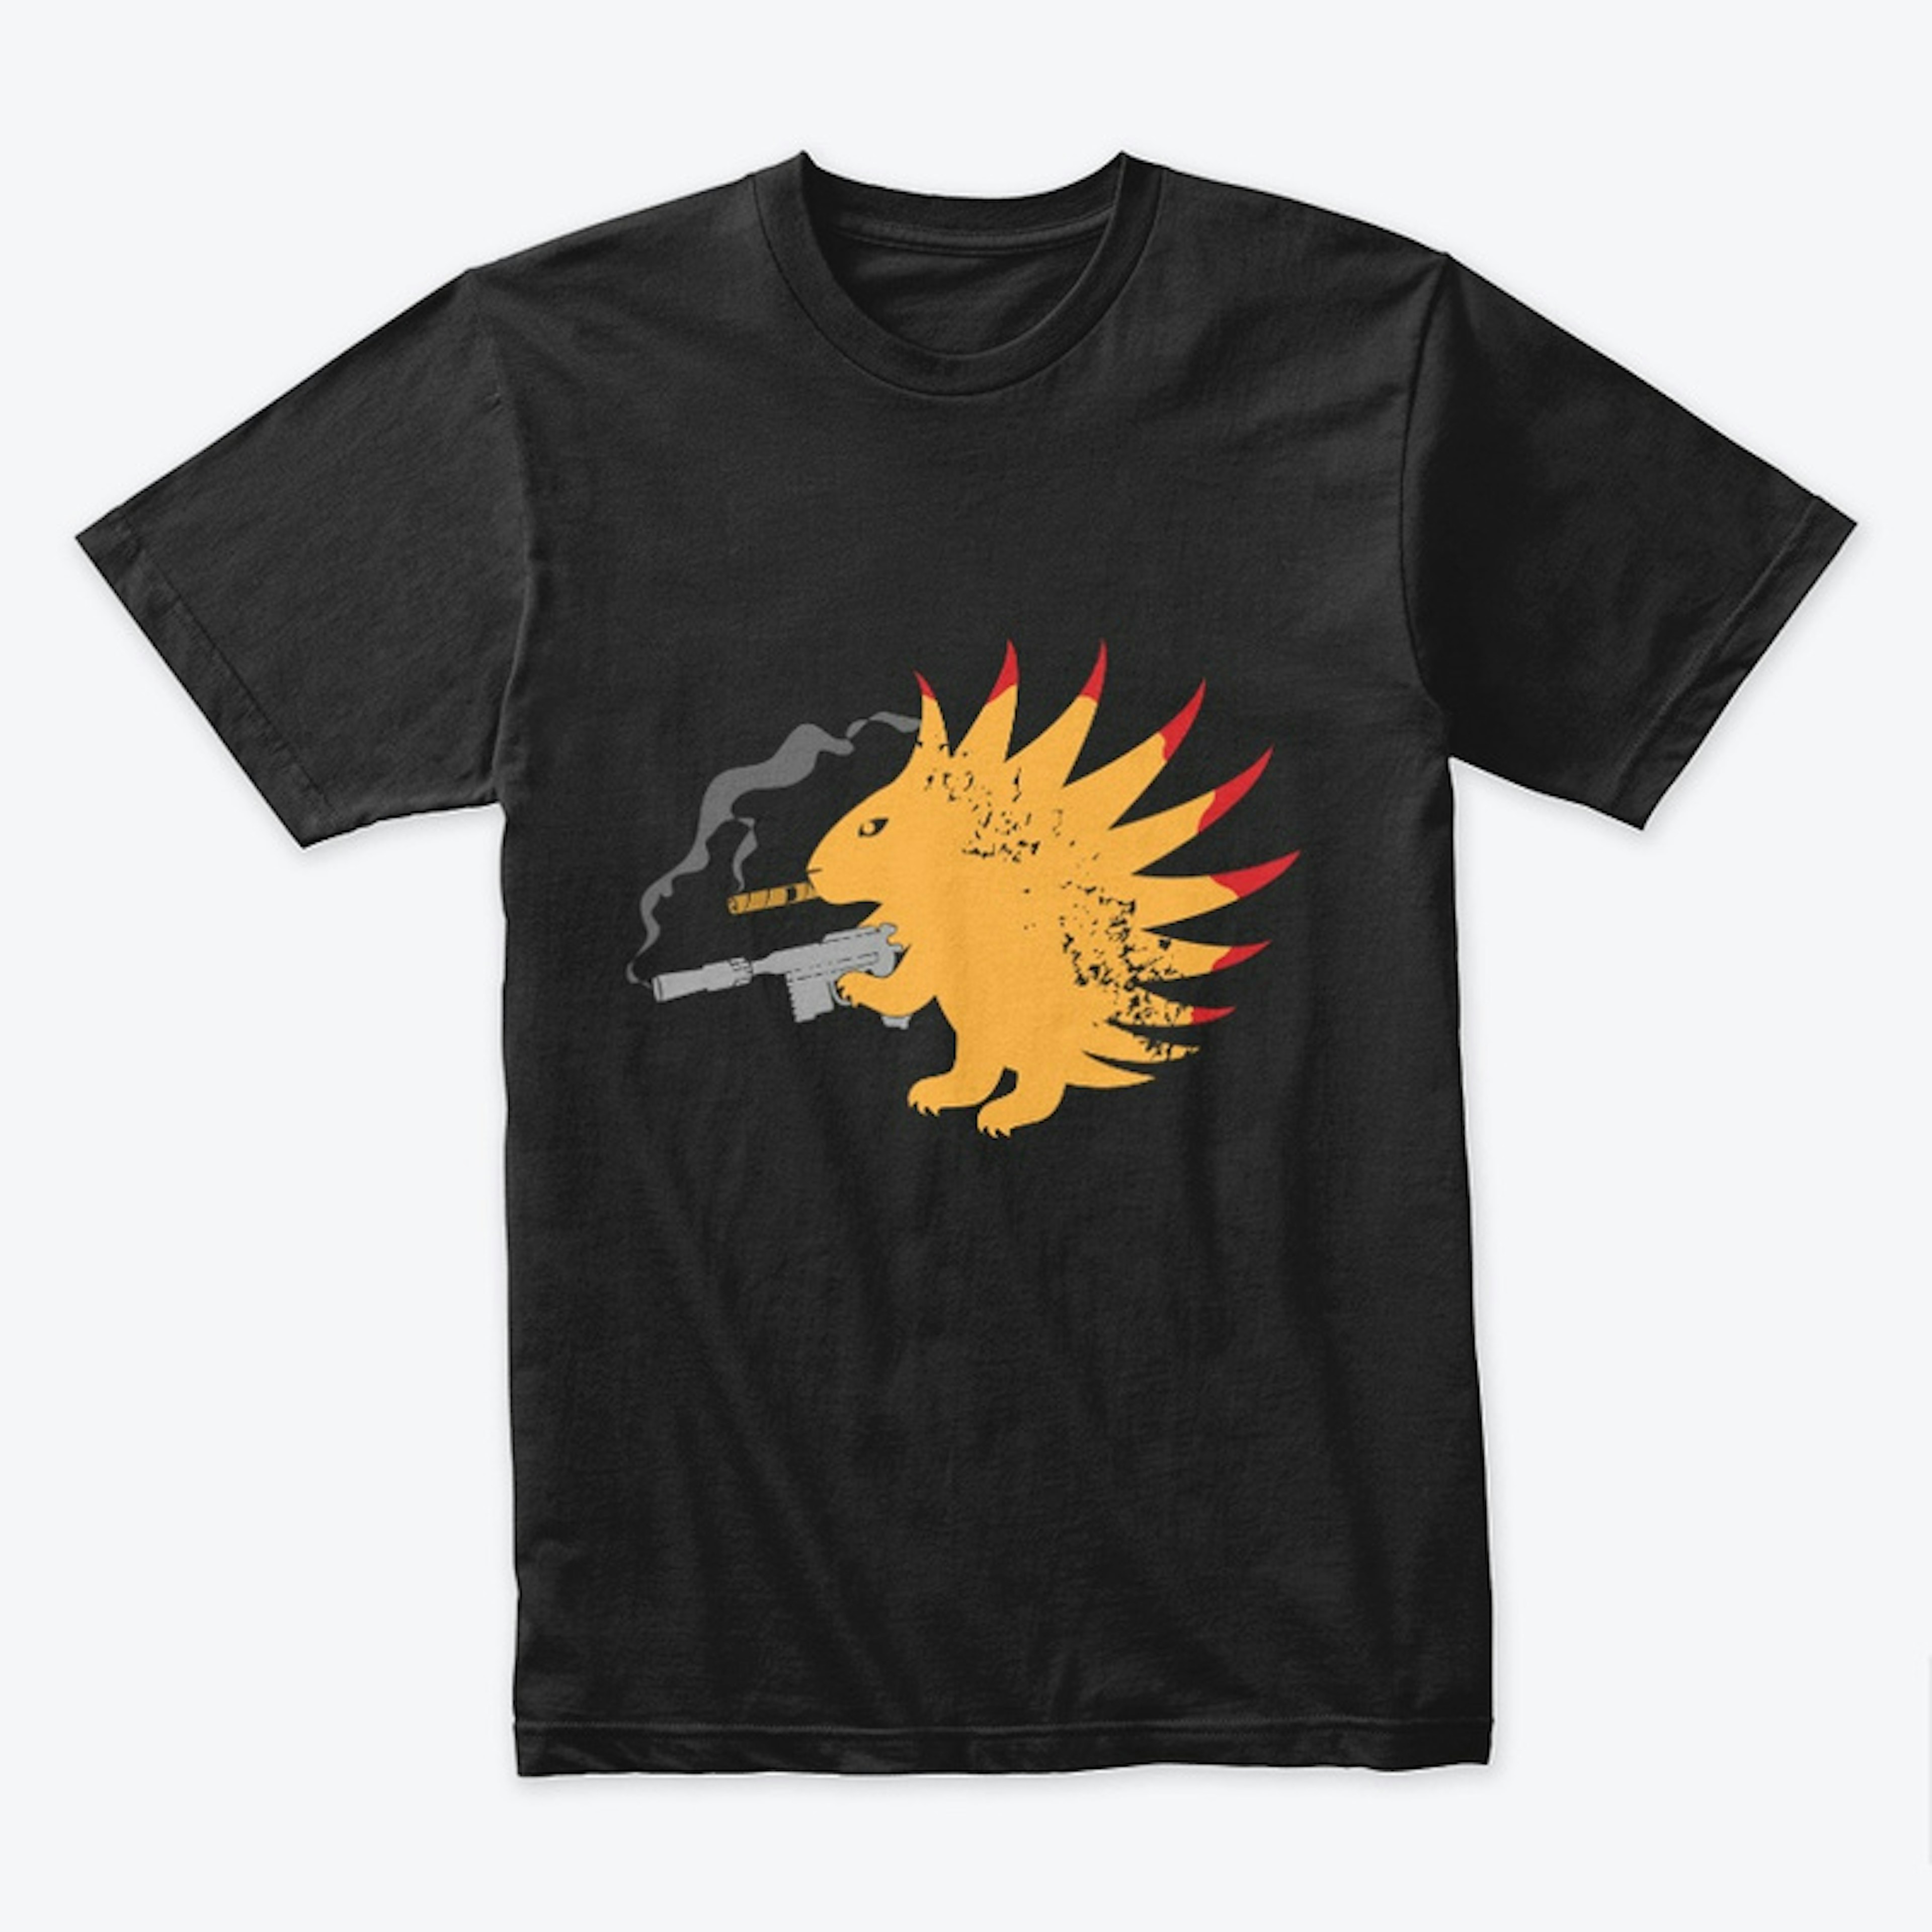 Mad porcupine T-shirt